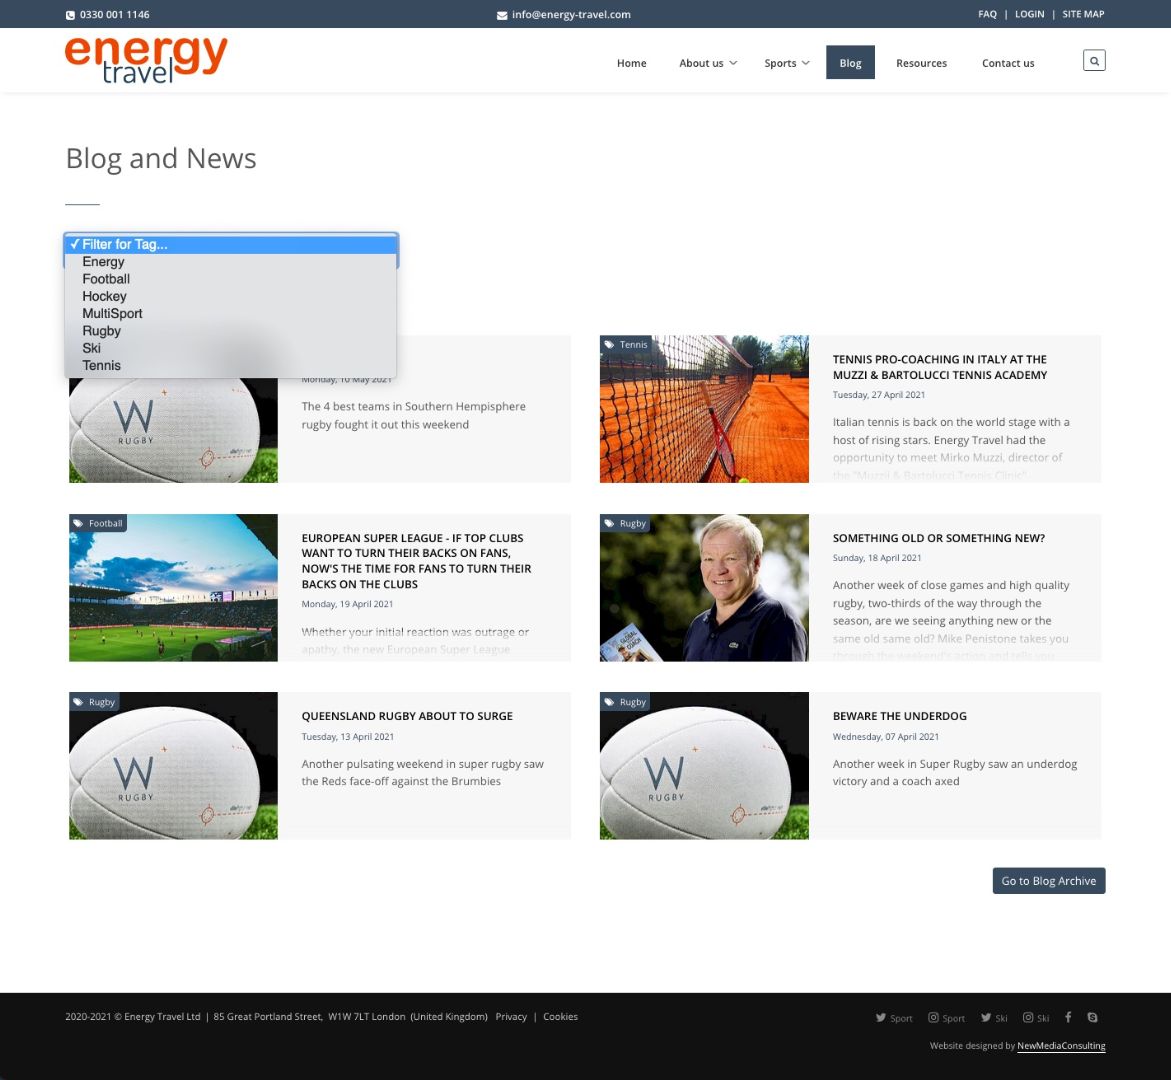 Gallery Energy Travel - Energy 03